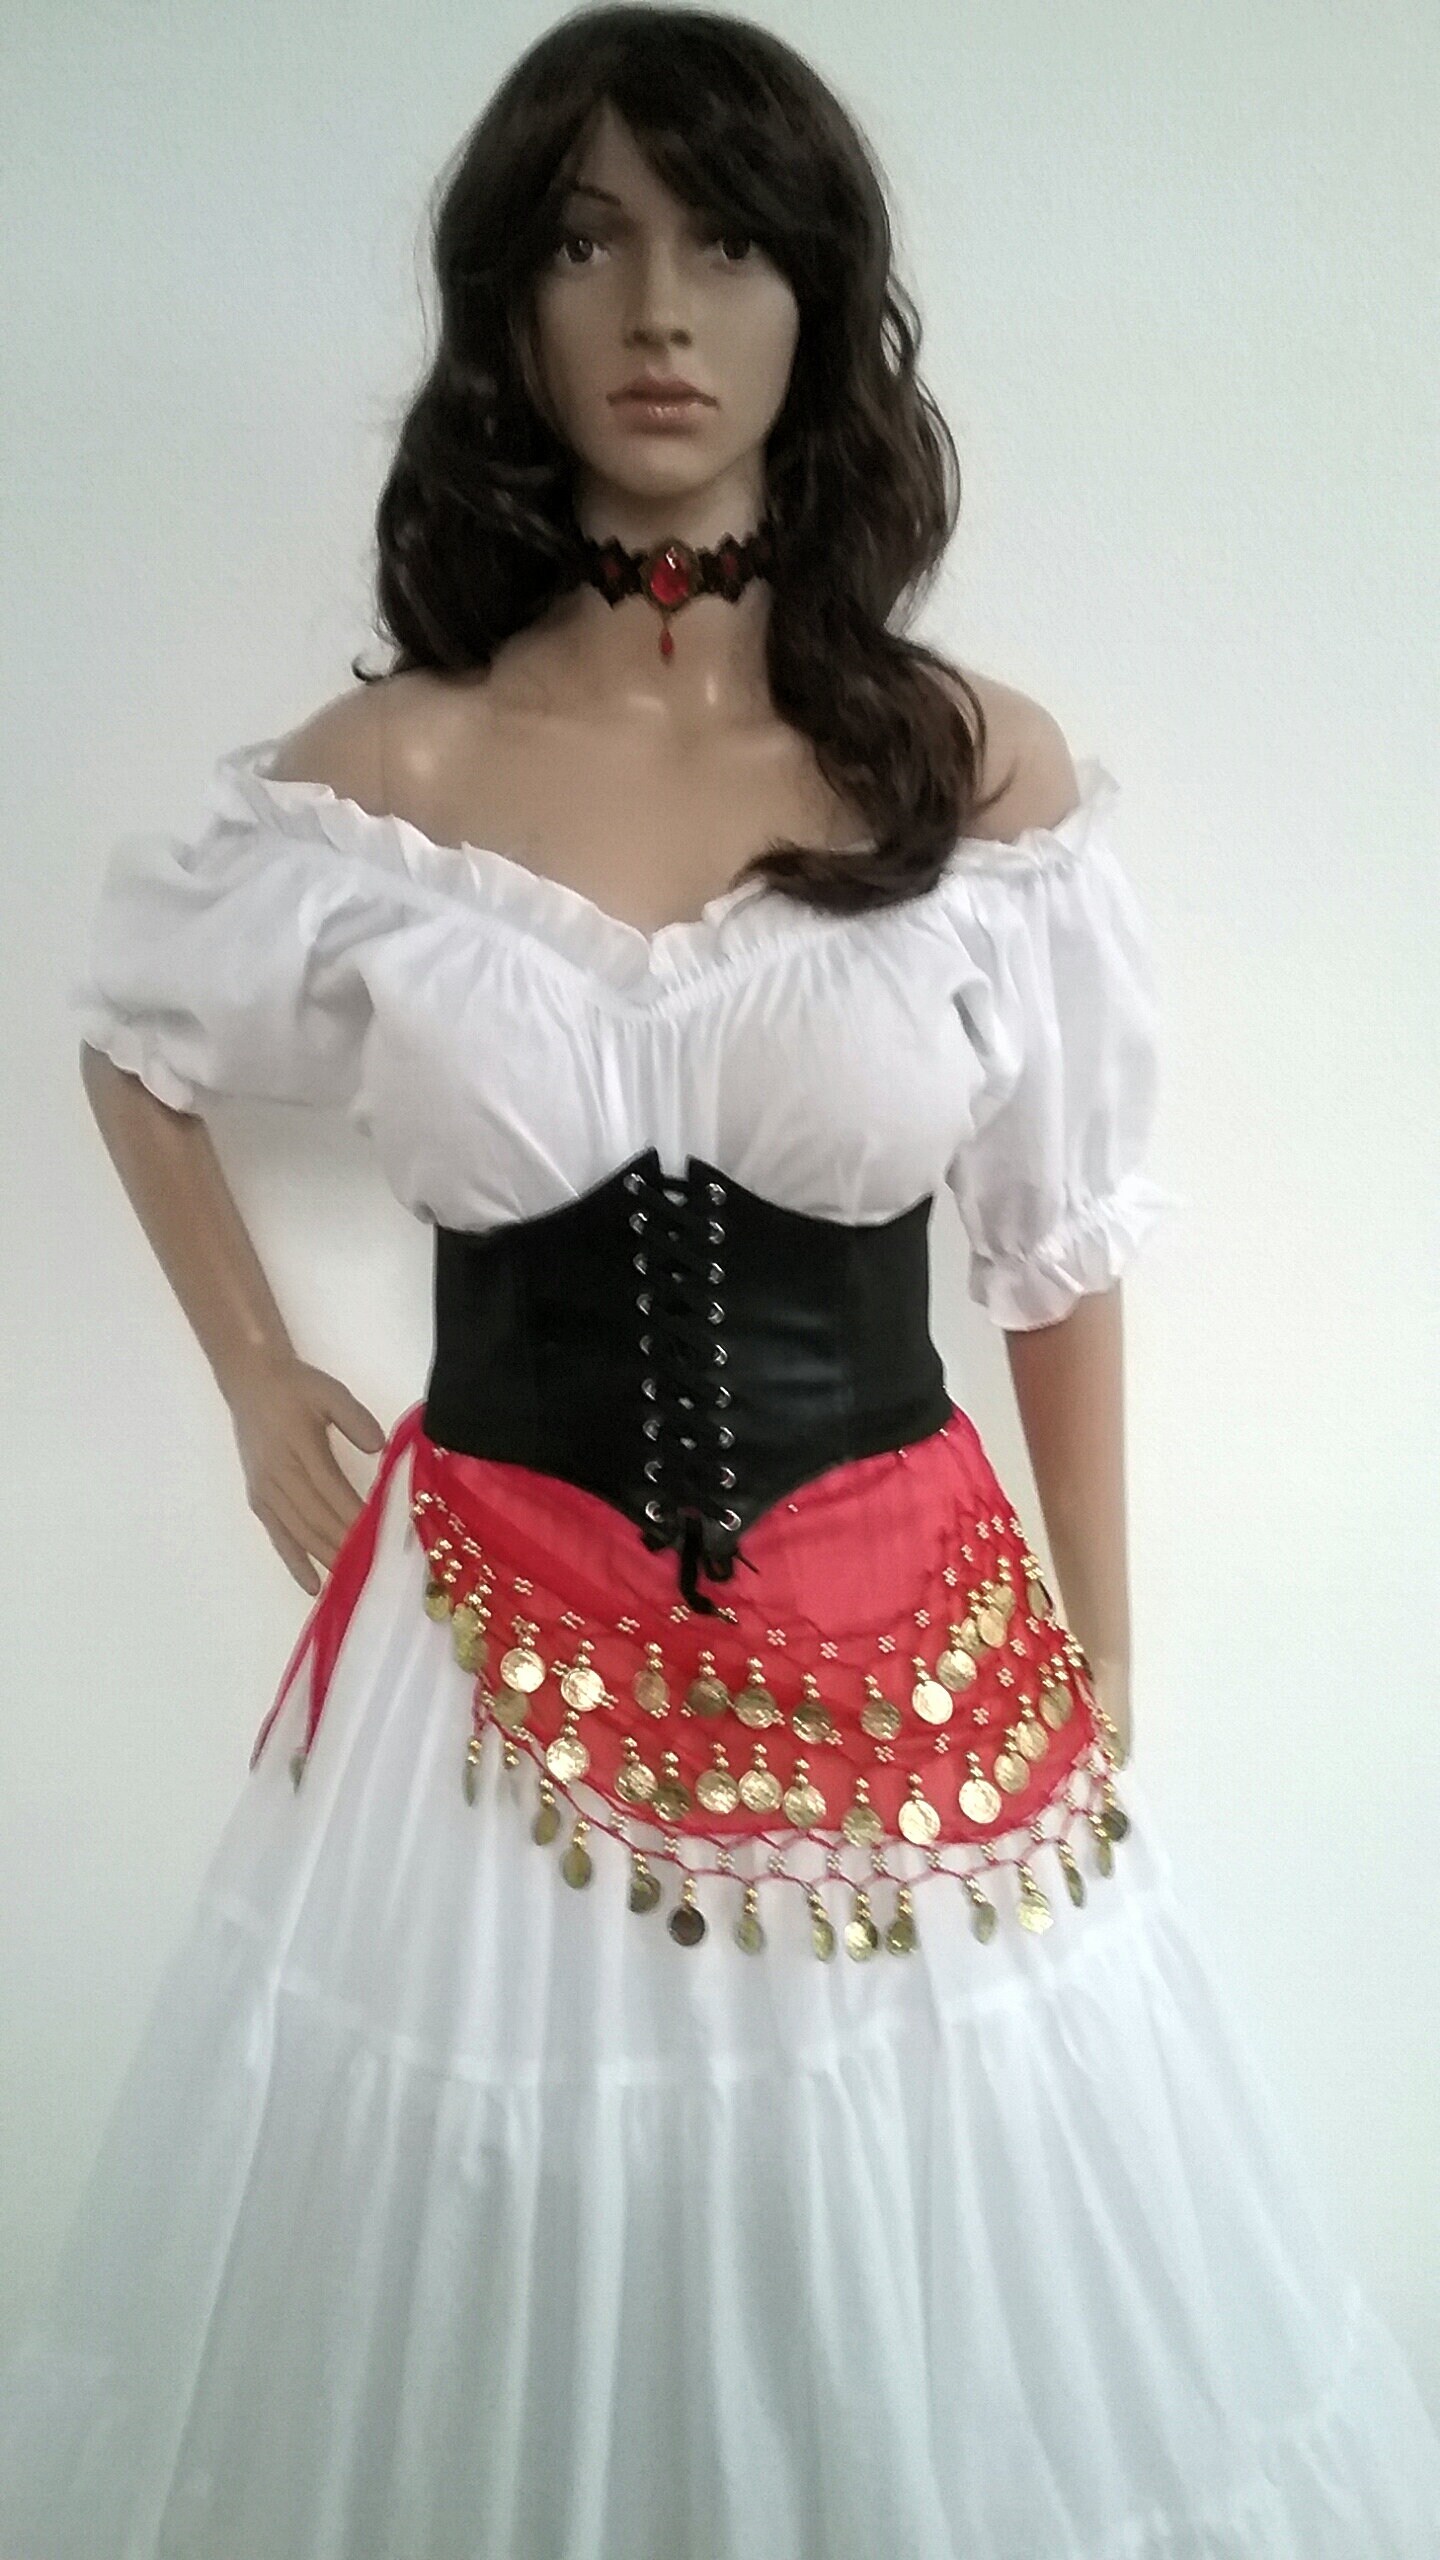 Pirate Renaissance Dress Gypsy Costume ...